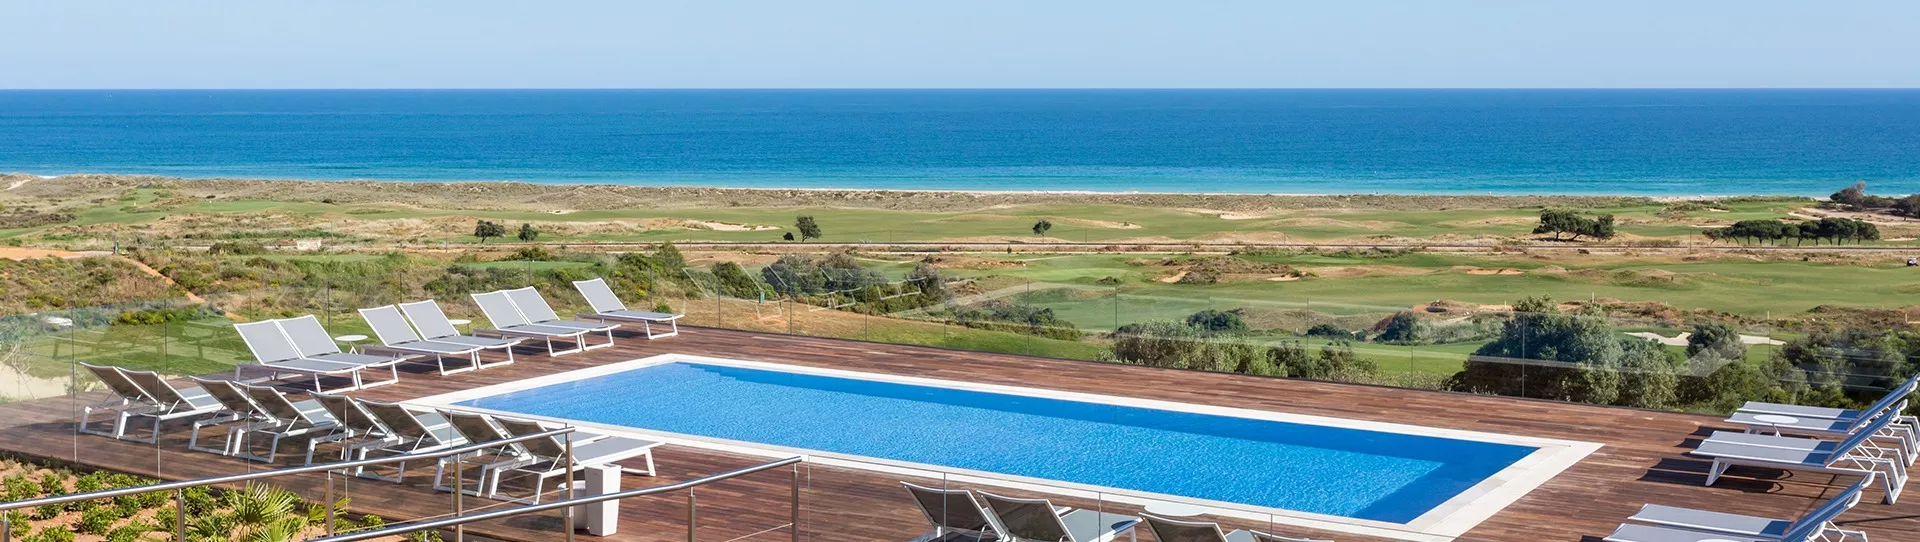 Portugal golf holidays - Palmares Resort - Photo 1